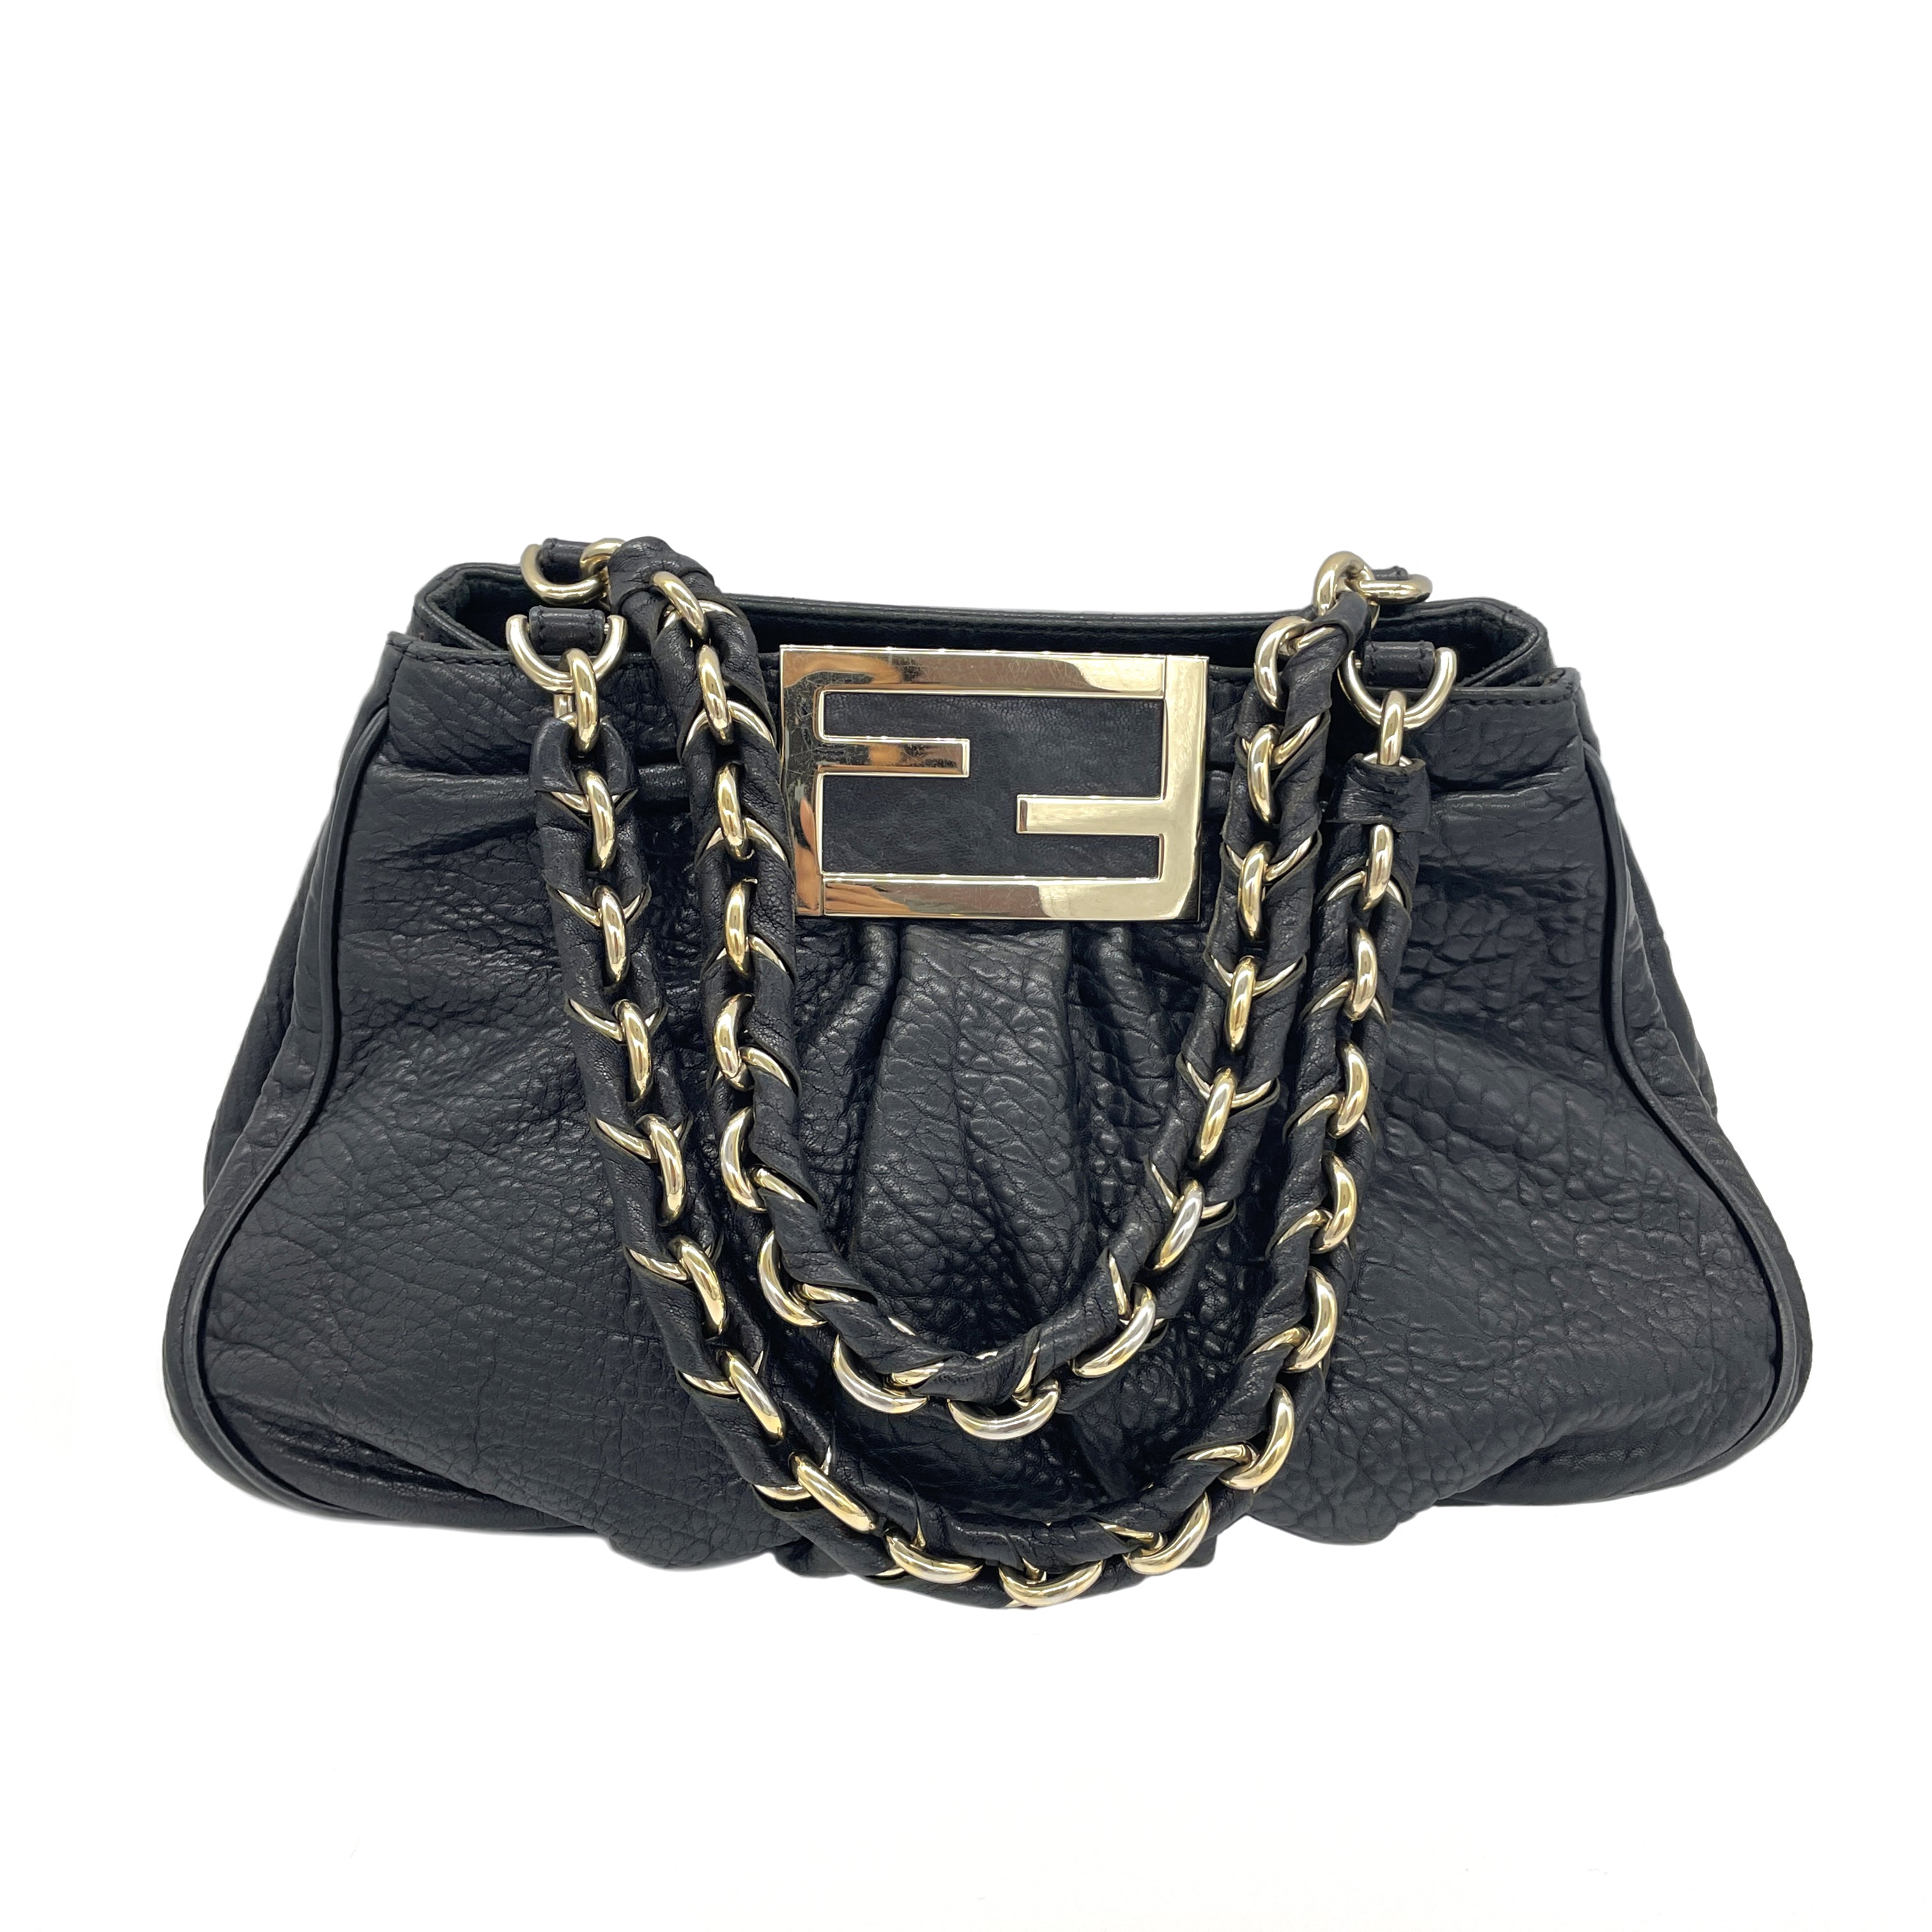 Fendi Mia Leather Handbag Leather Handbag in Excellent condition